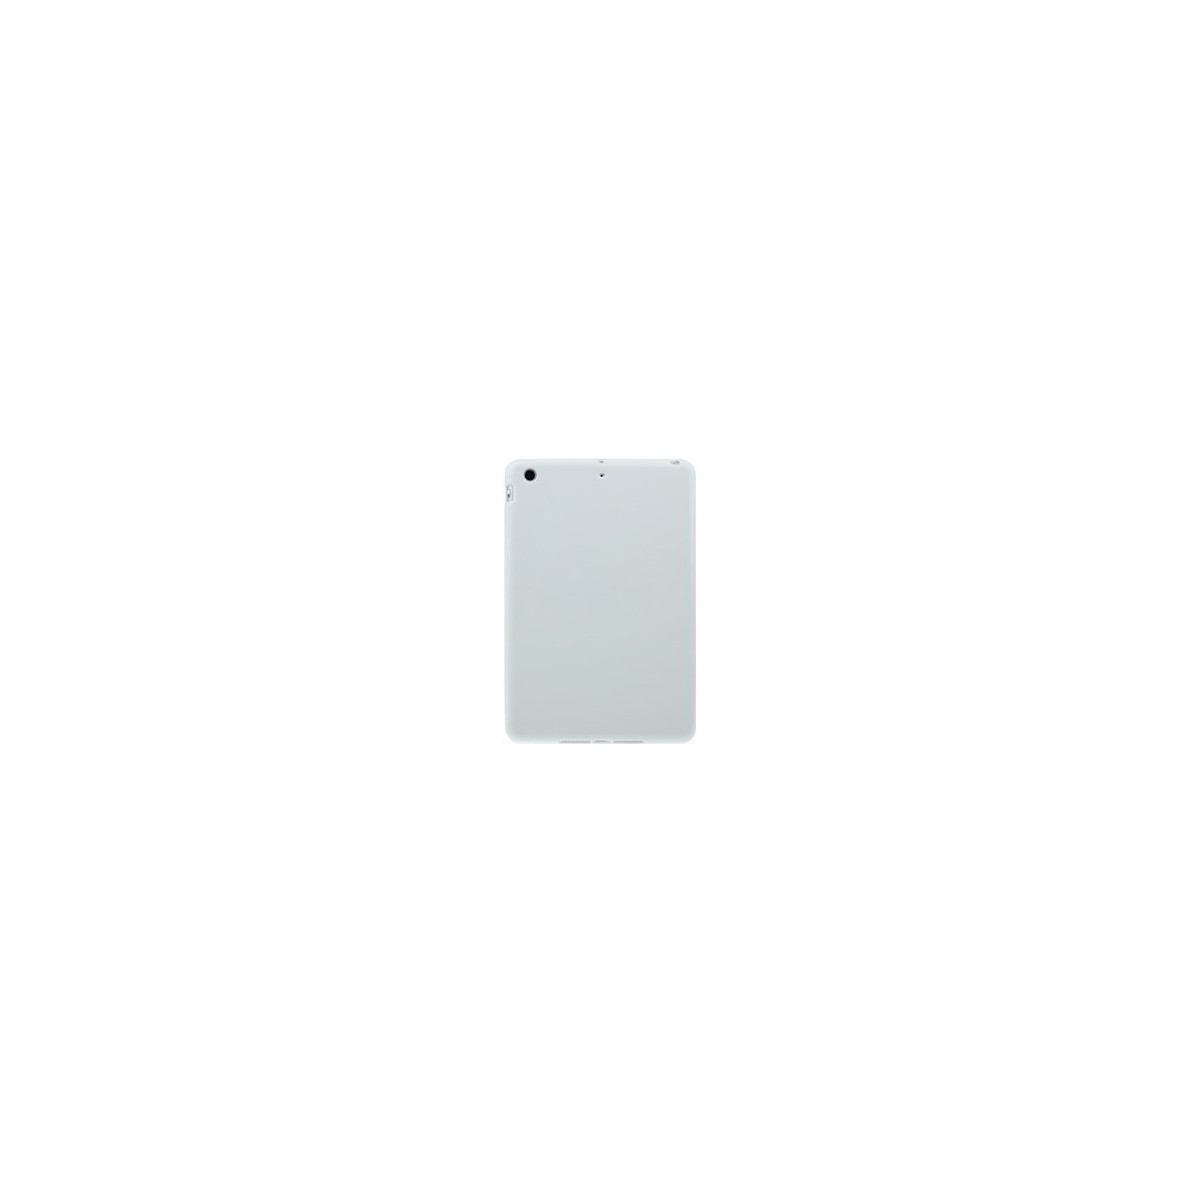 Coque Silicone Gel iPad mini 1/2/3 Blanc